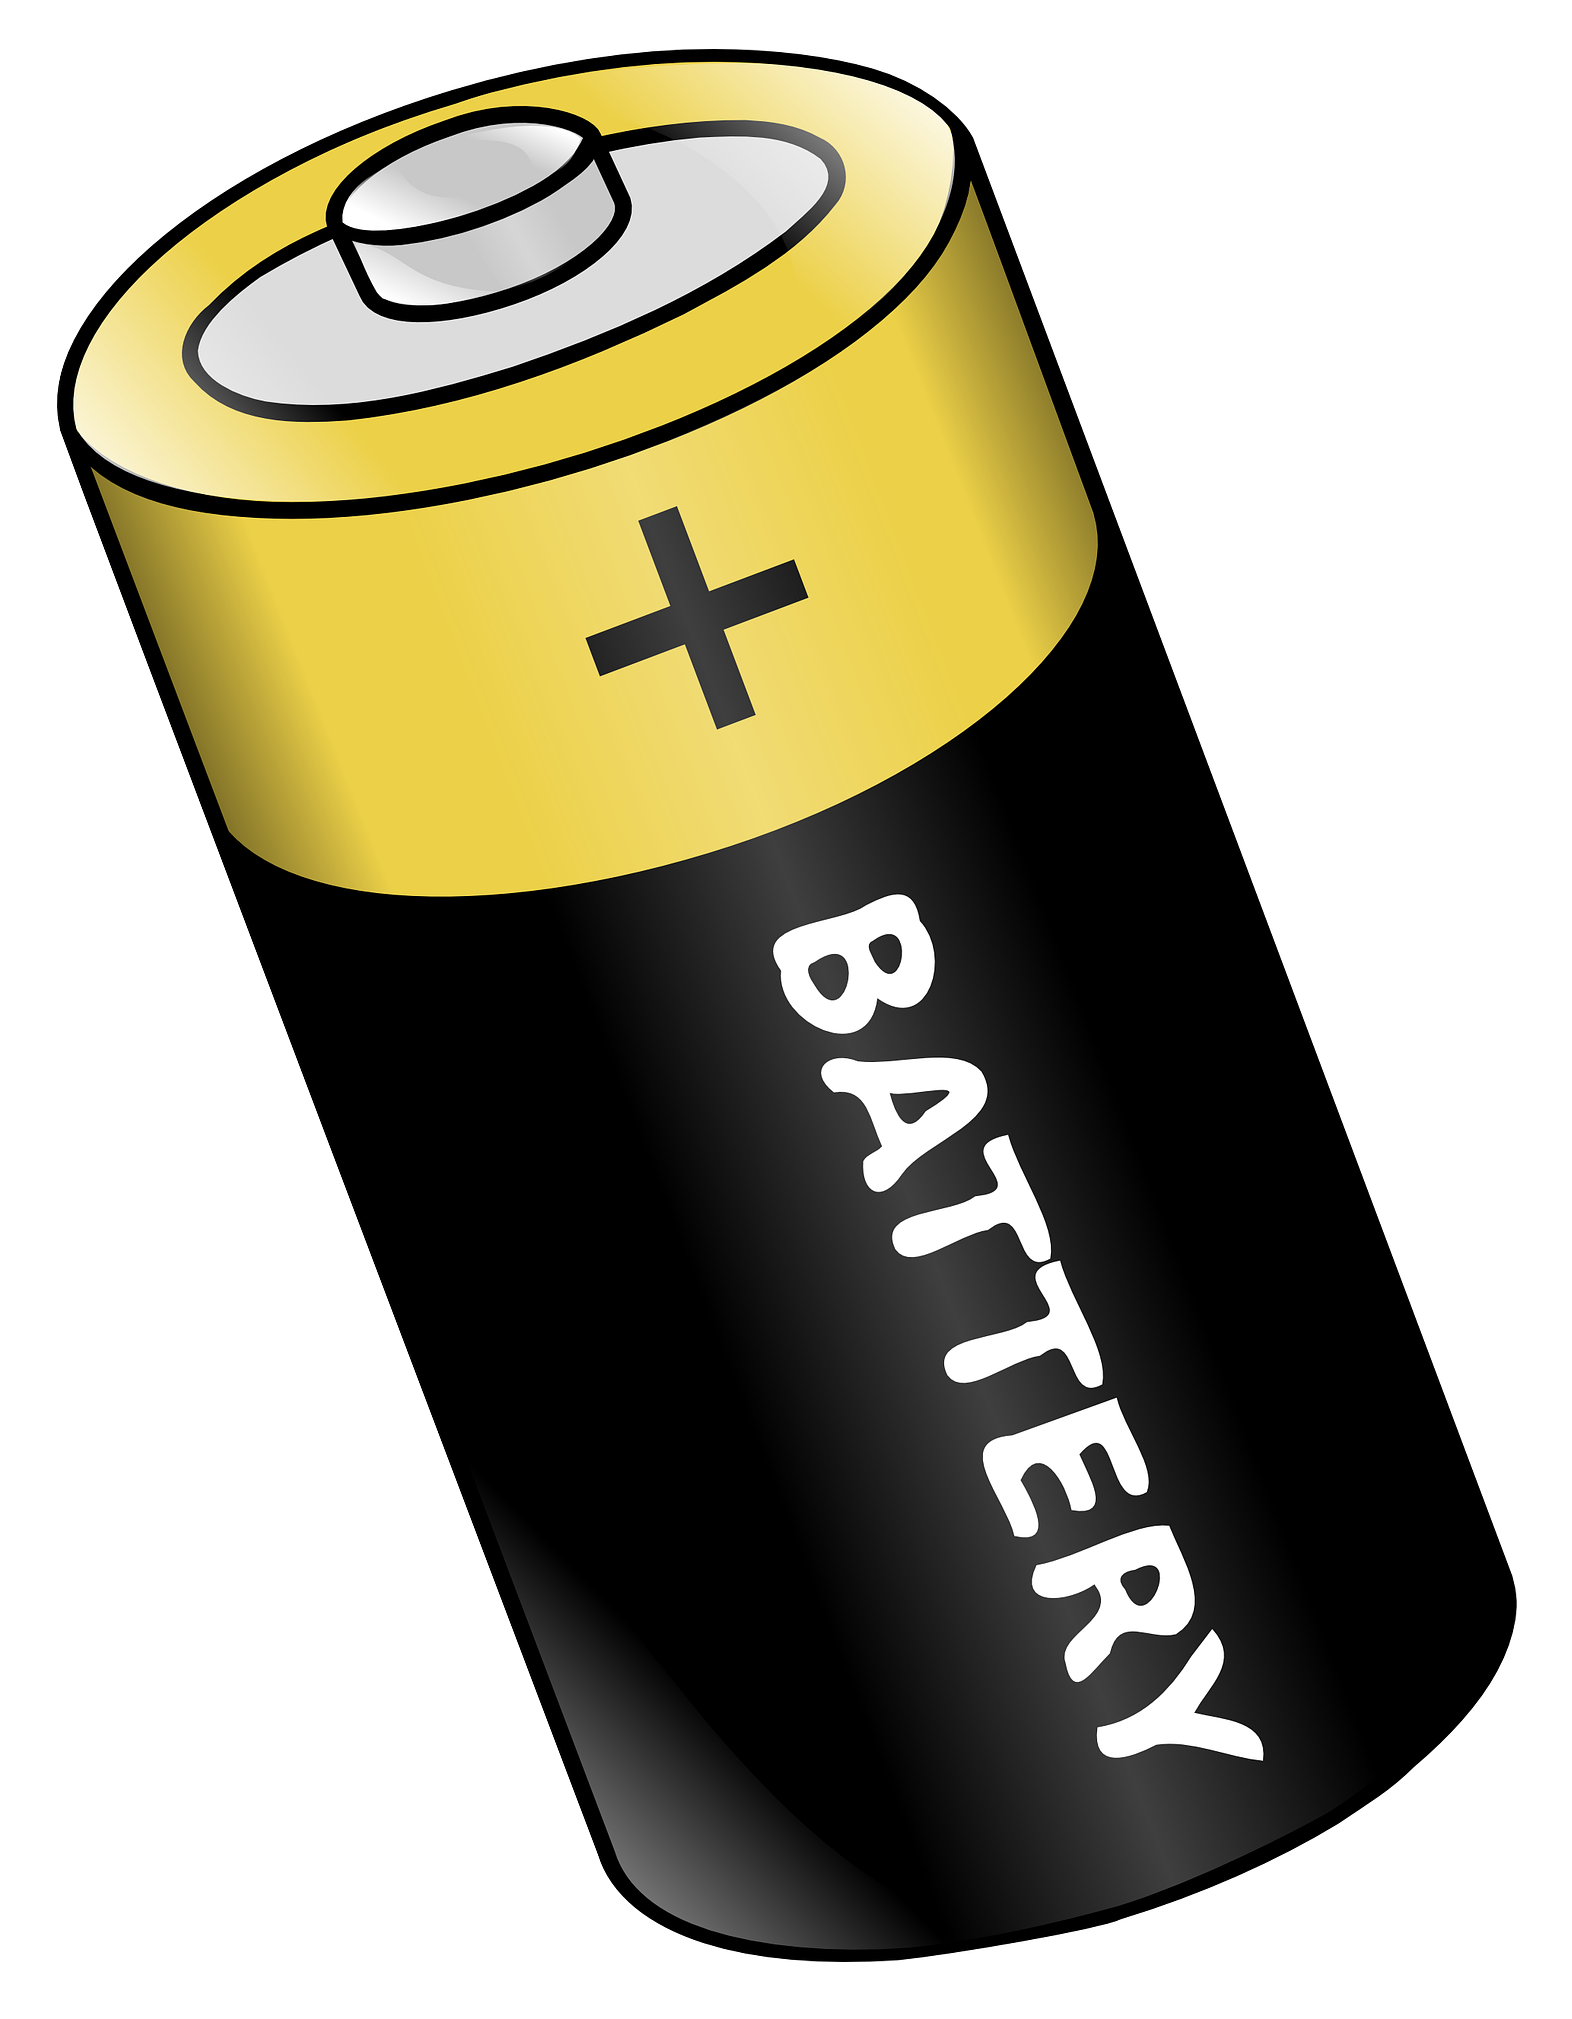 Batteria alcalina